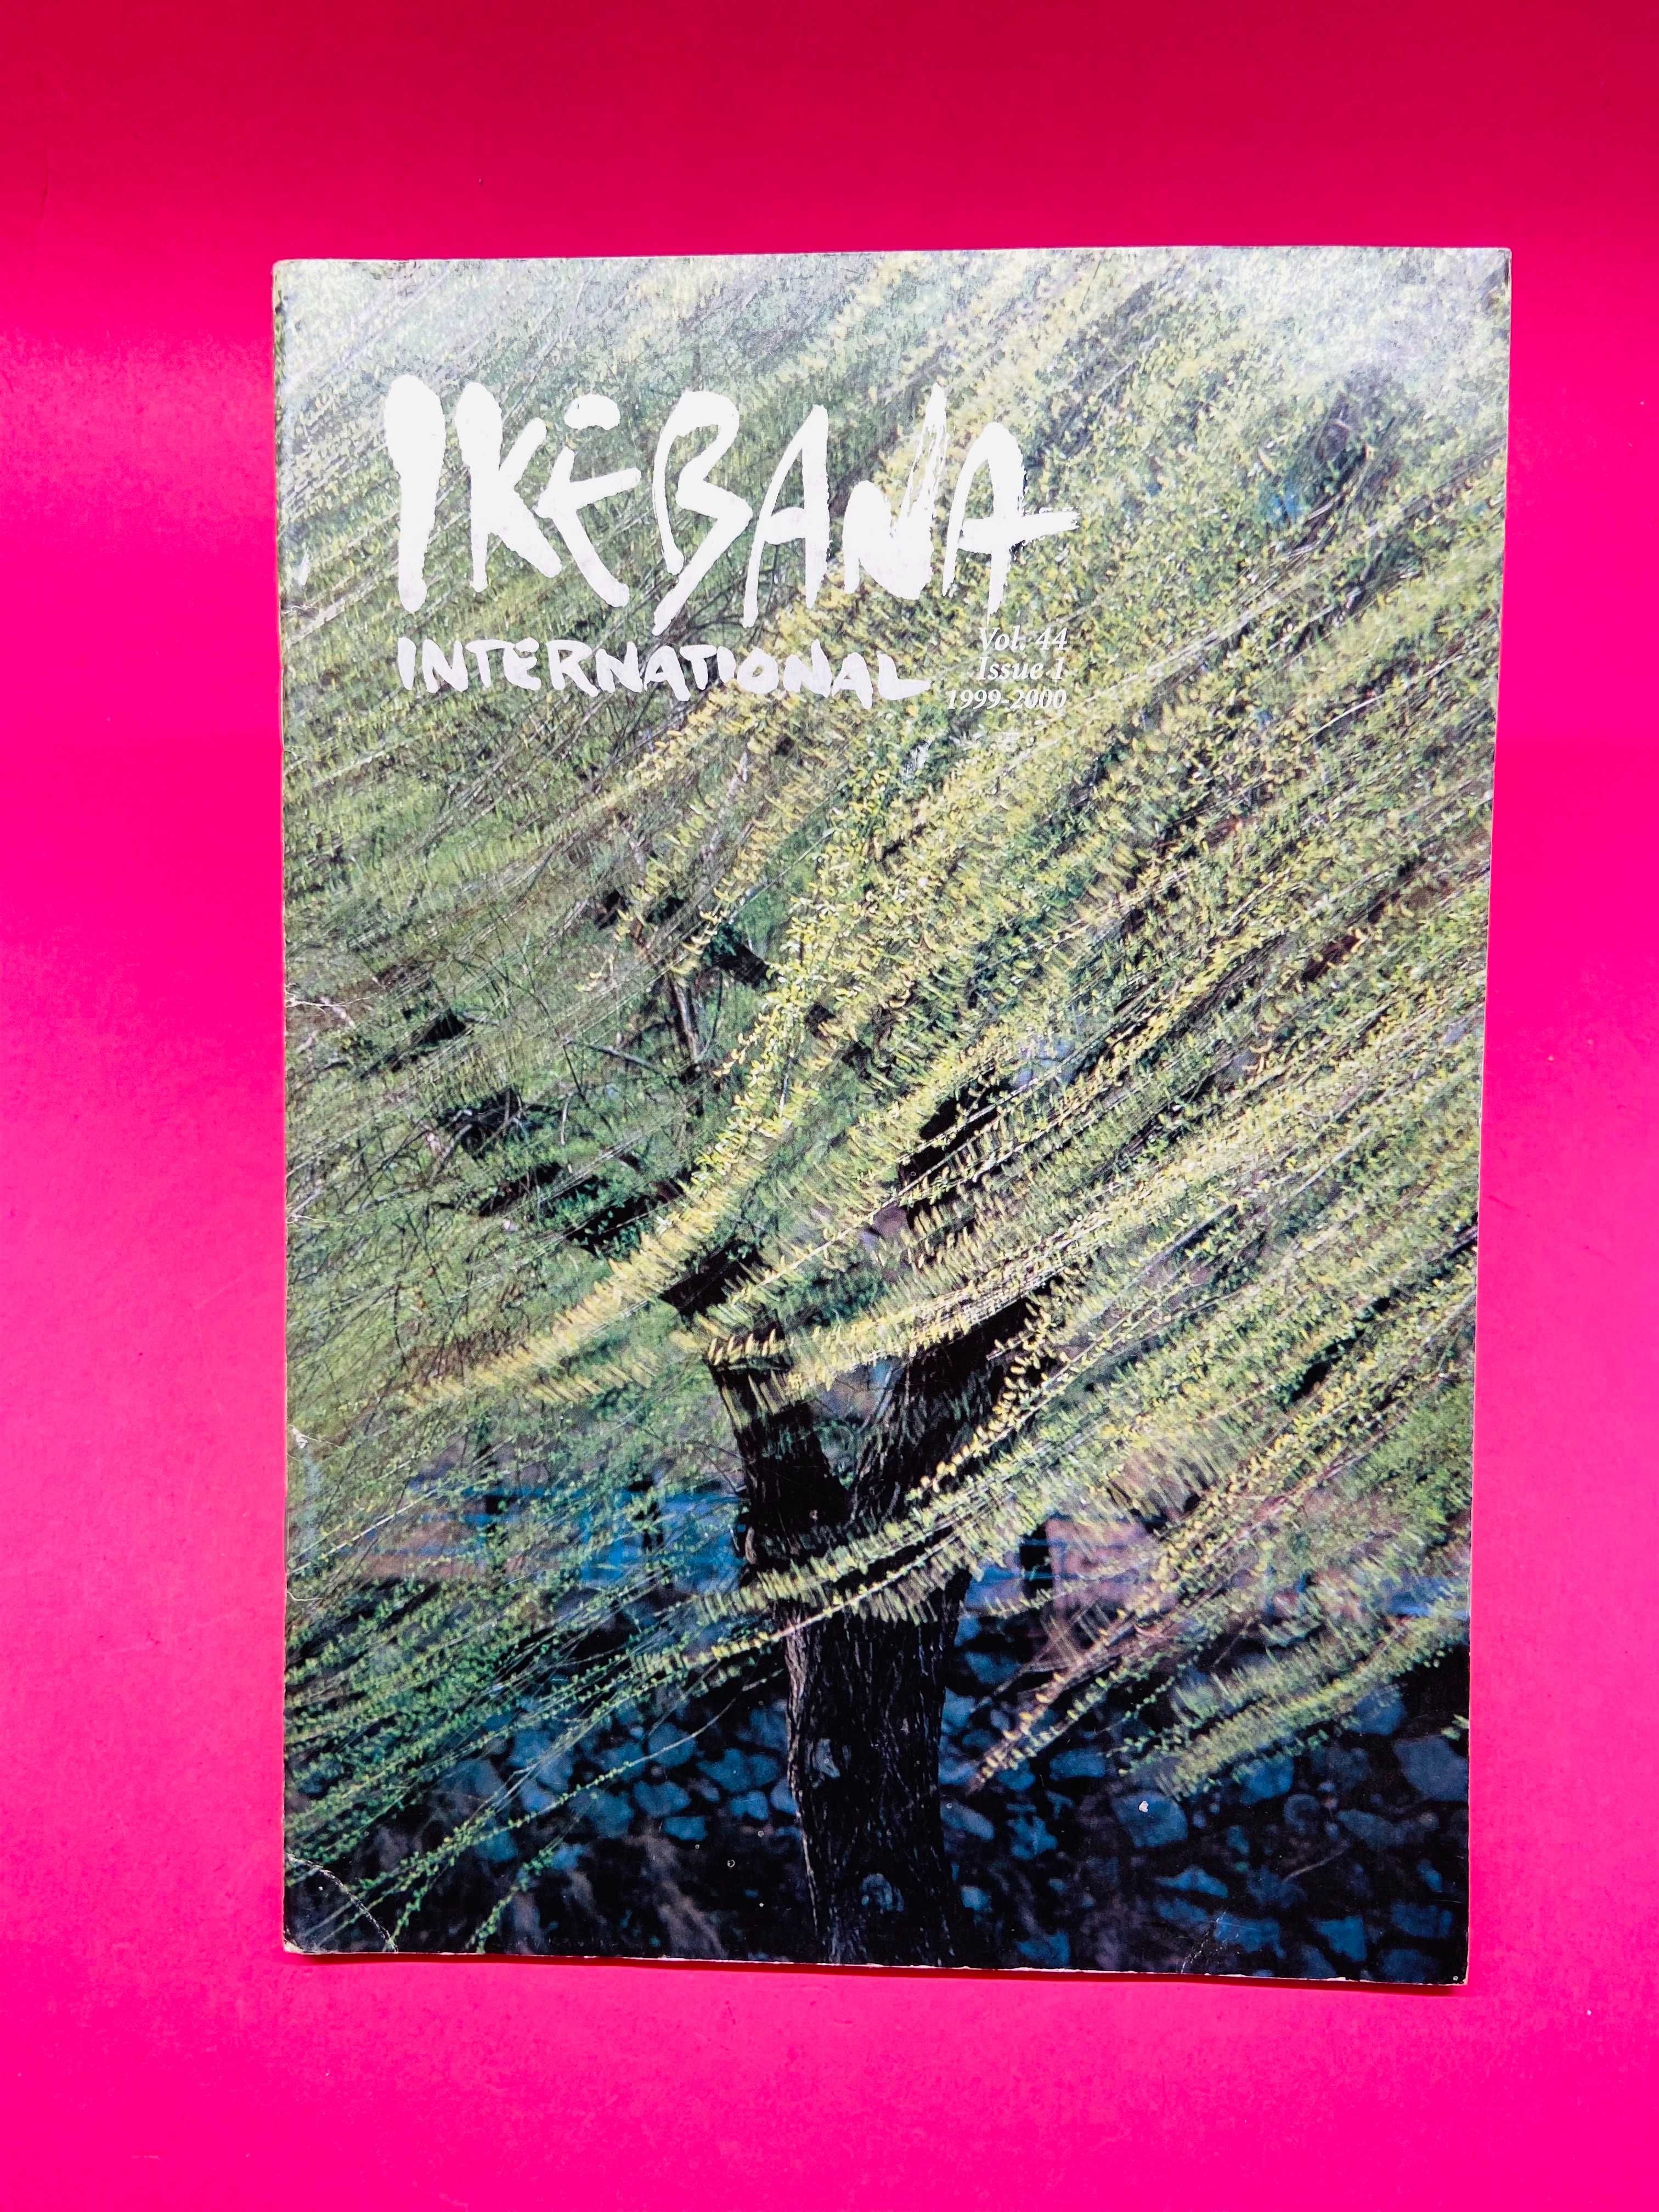 Revista Ikebana Internacional Vol. 44, Issue 1, 1999/2000